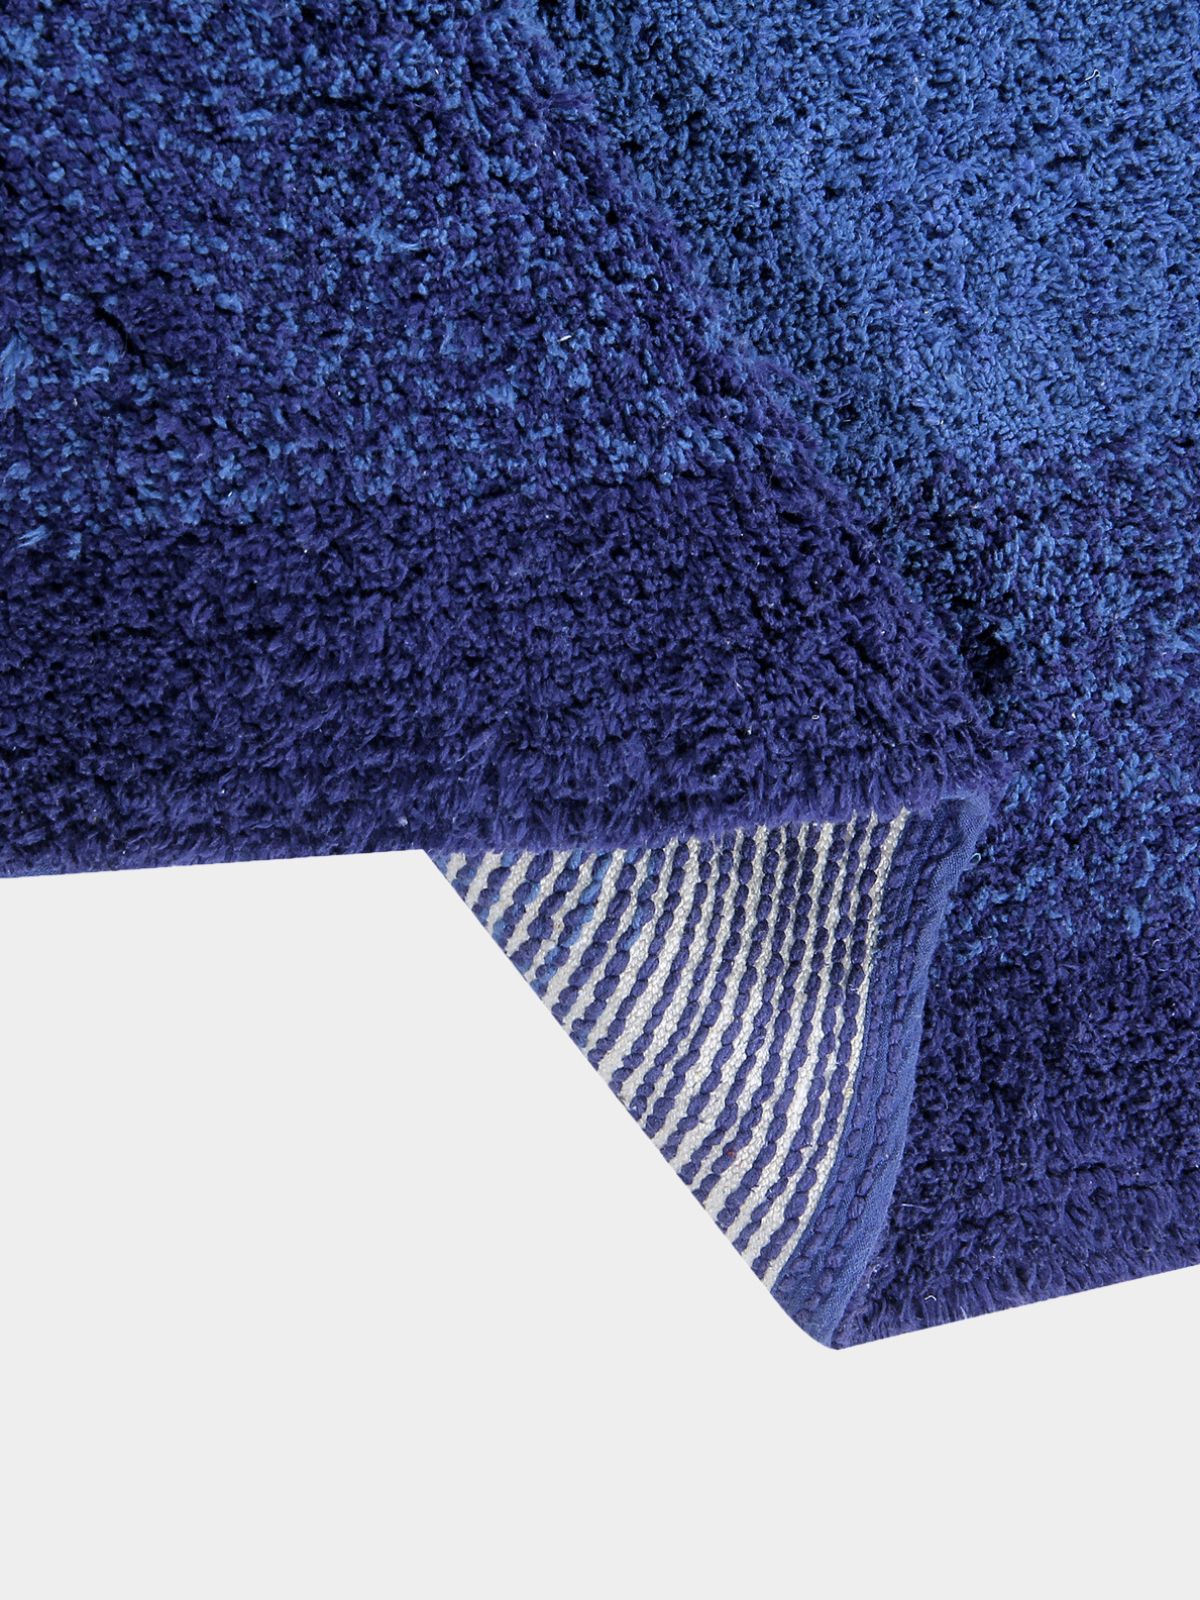 Tappeto in cotone lavabile Water Alaska Blue, 140x200 cm.-5